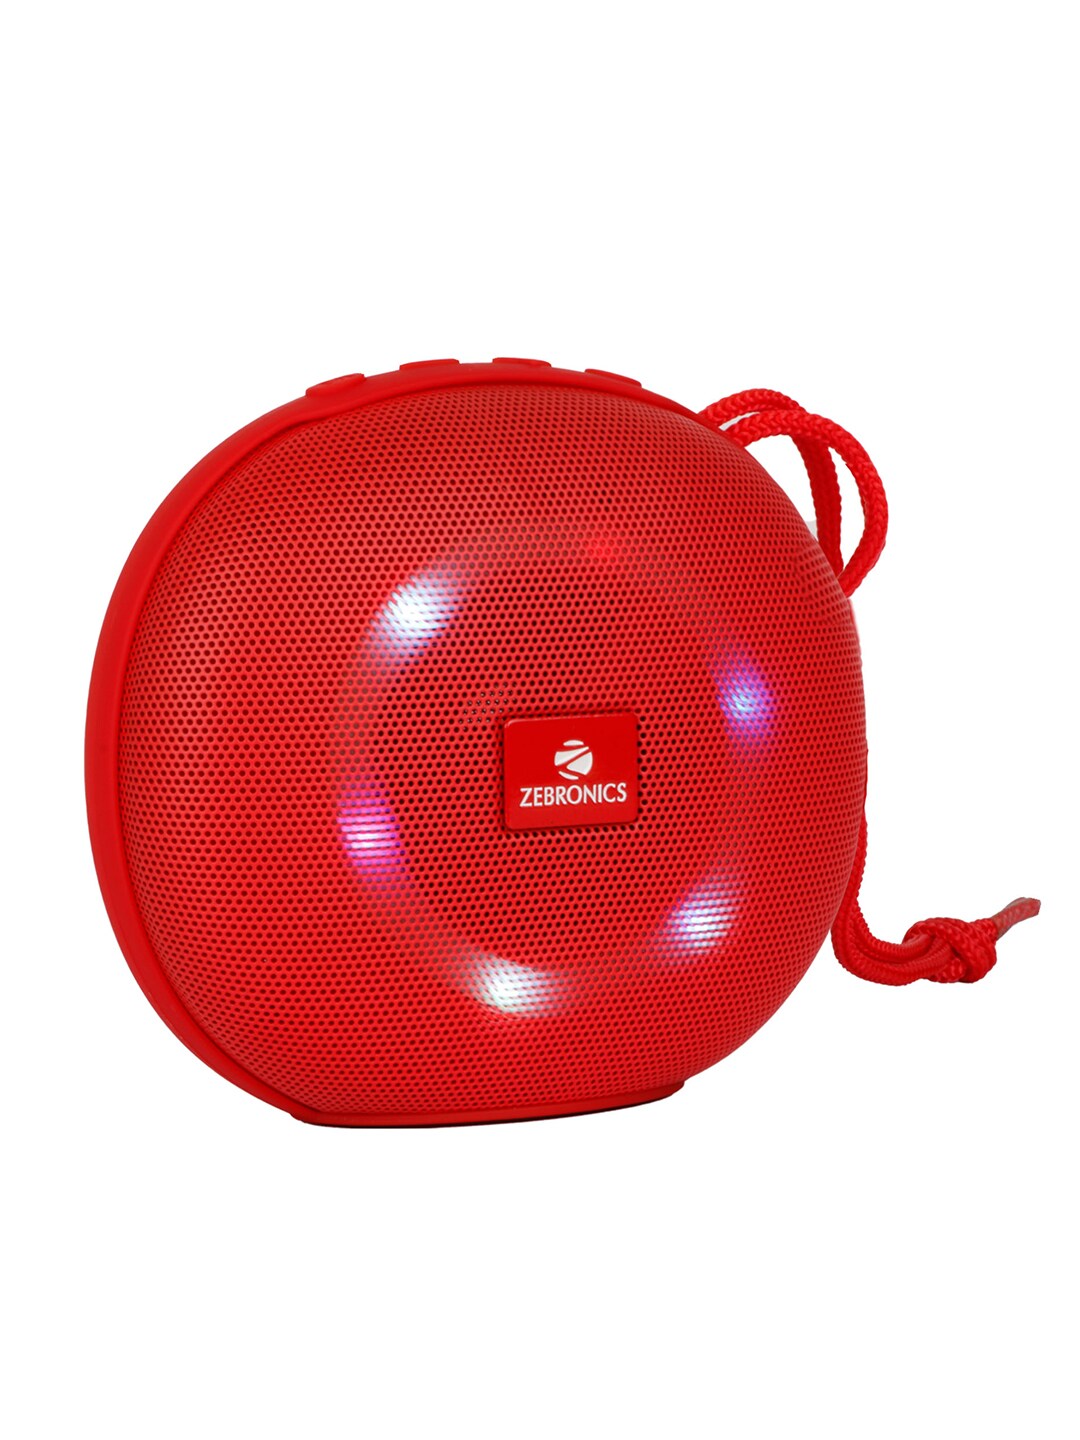 ZEBRONICS Zeb-Delight 10 Wireless Bluetooth v5.0 Portable Speaker - Red Price in India